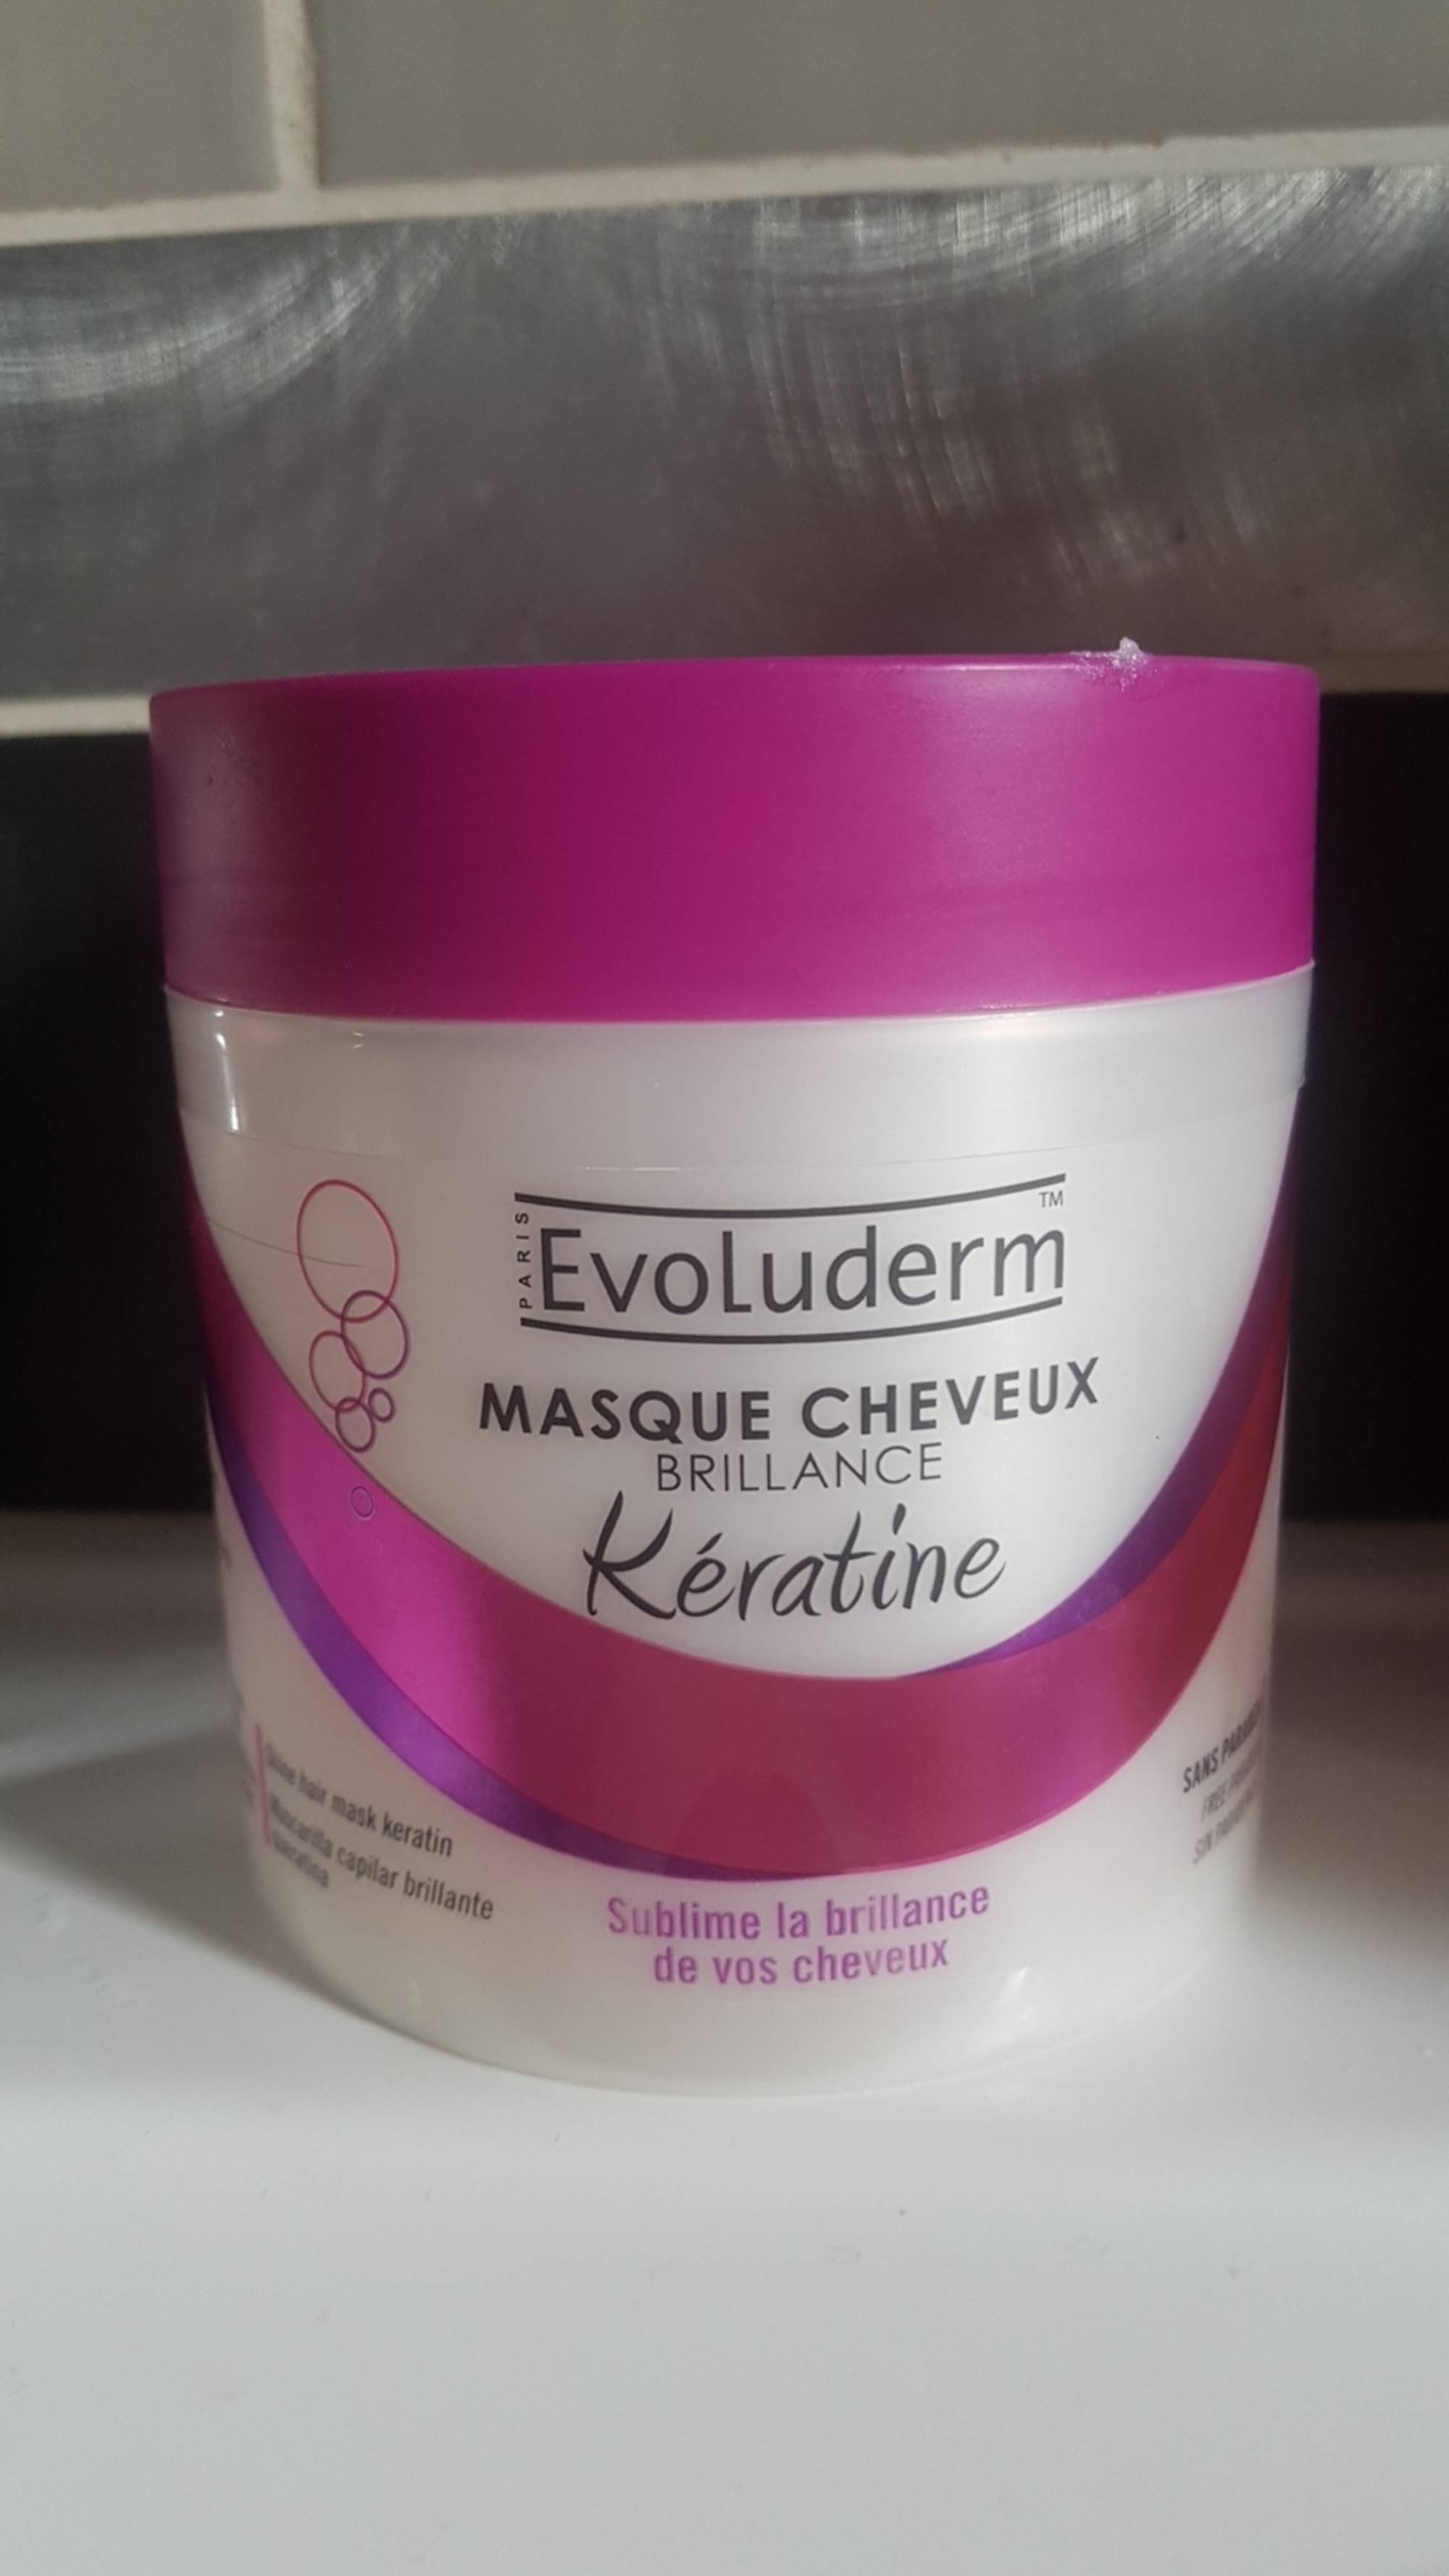 EVOLUDERM - Kératine Masque cheveux - Brillance